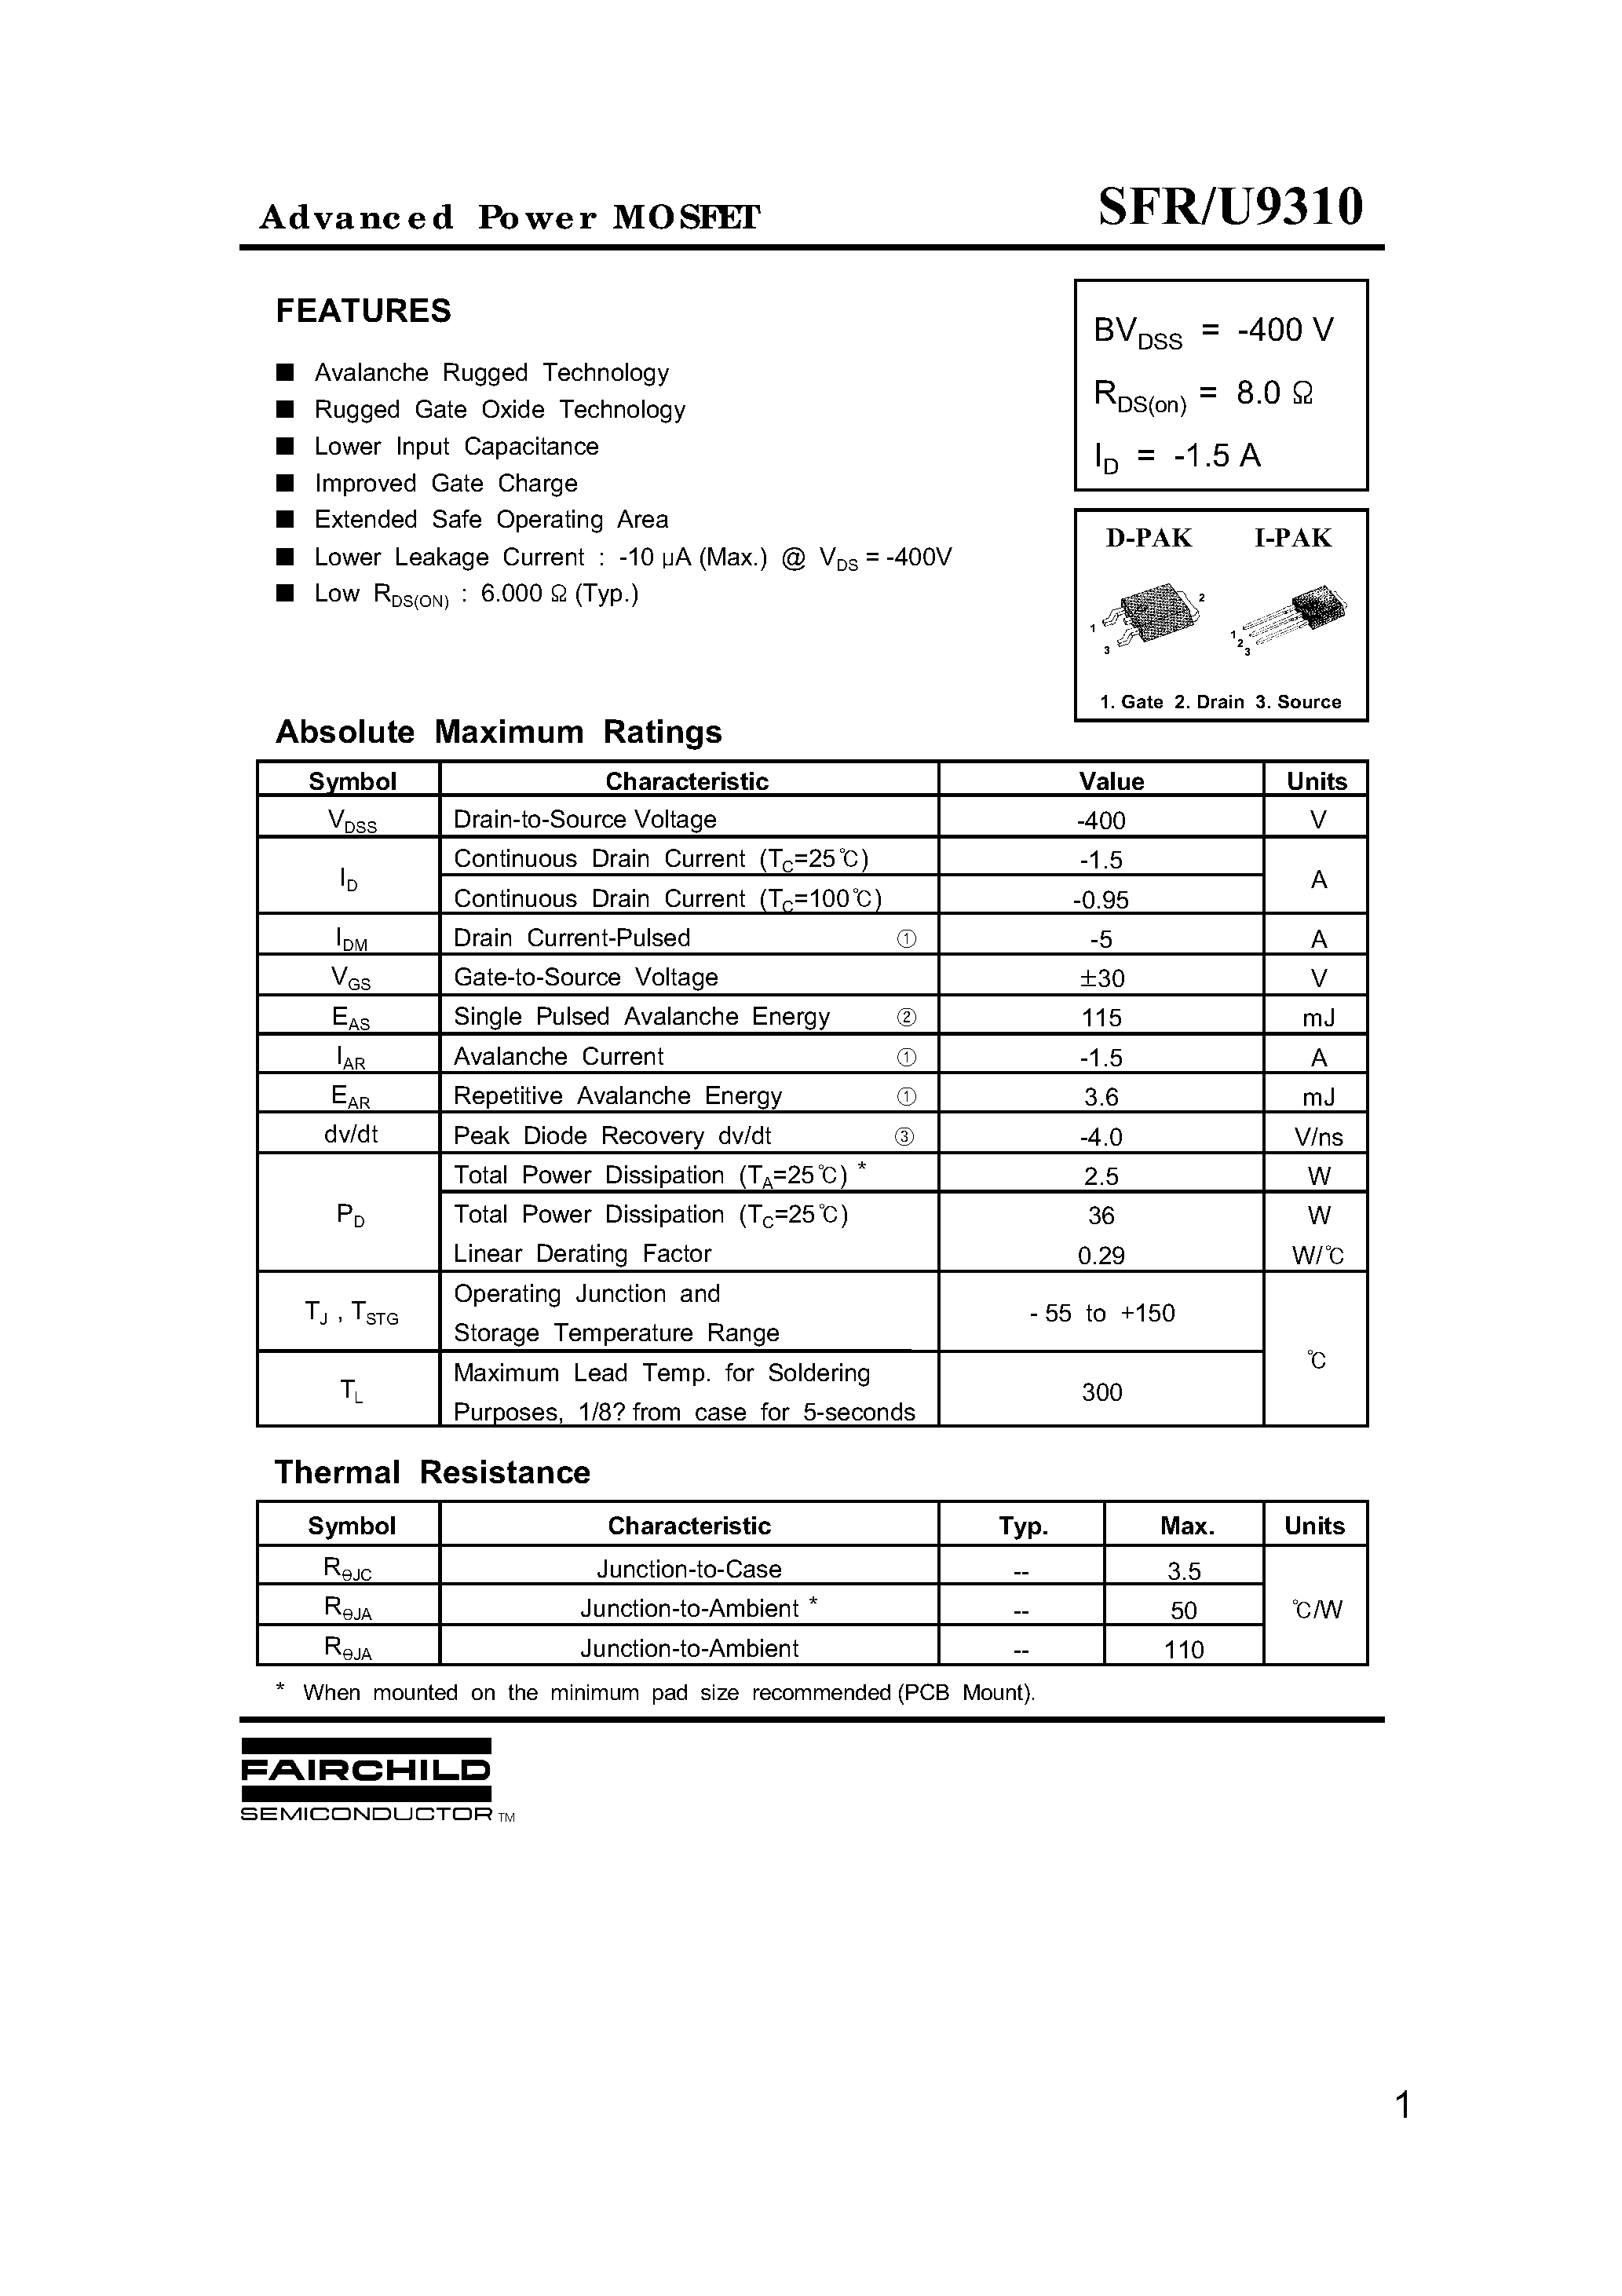 Datasheet SFR9310 - Advanced Power MOSFET page 1